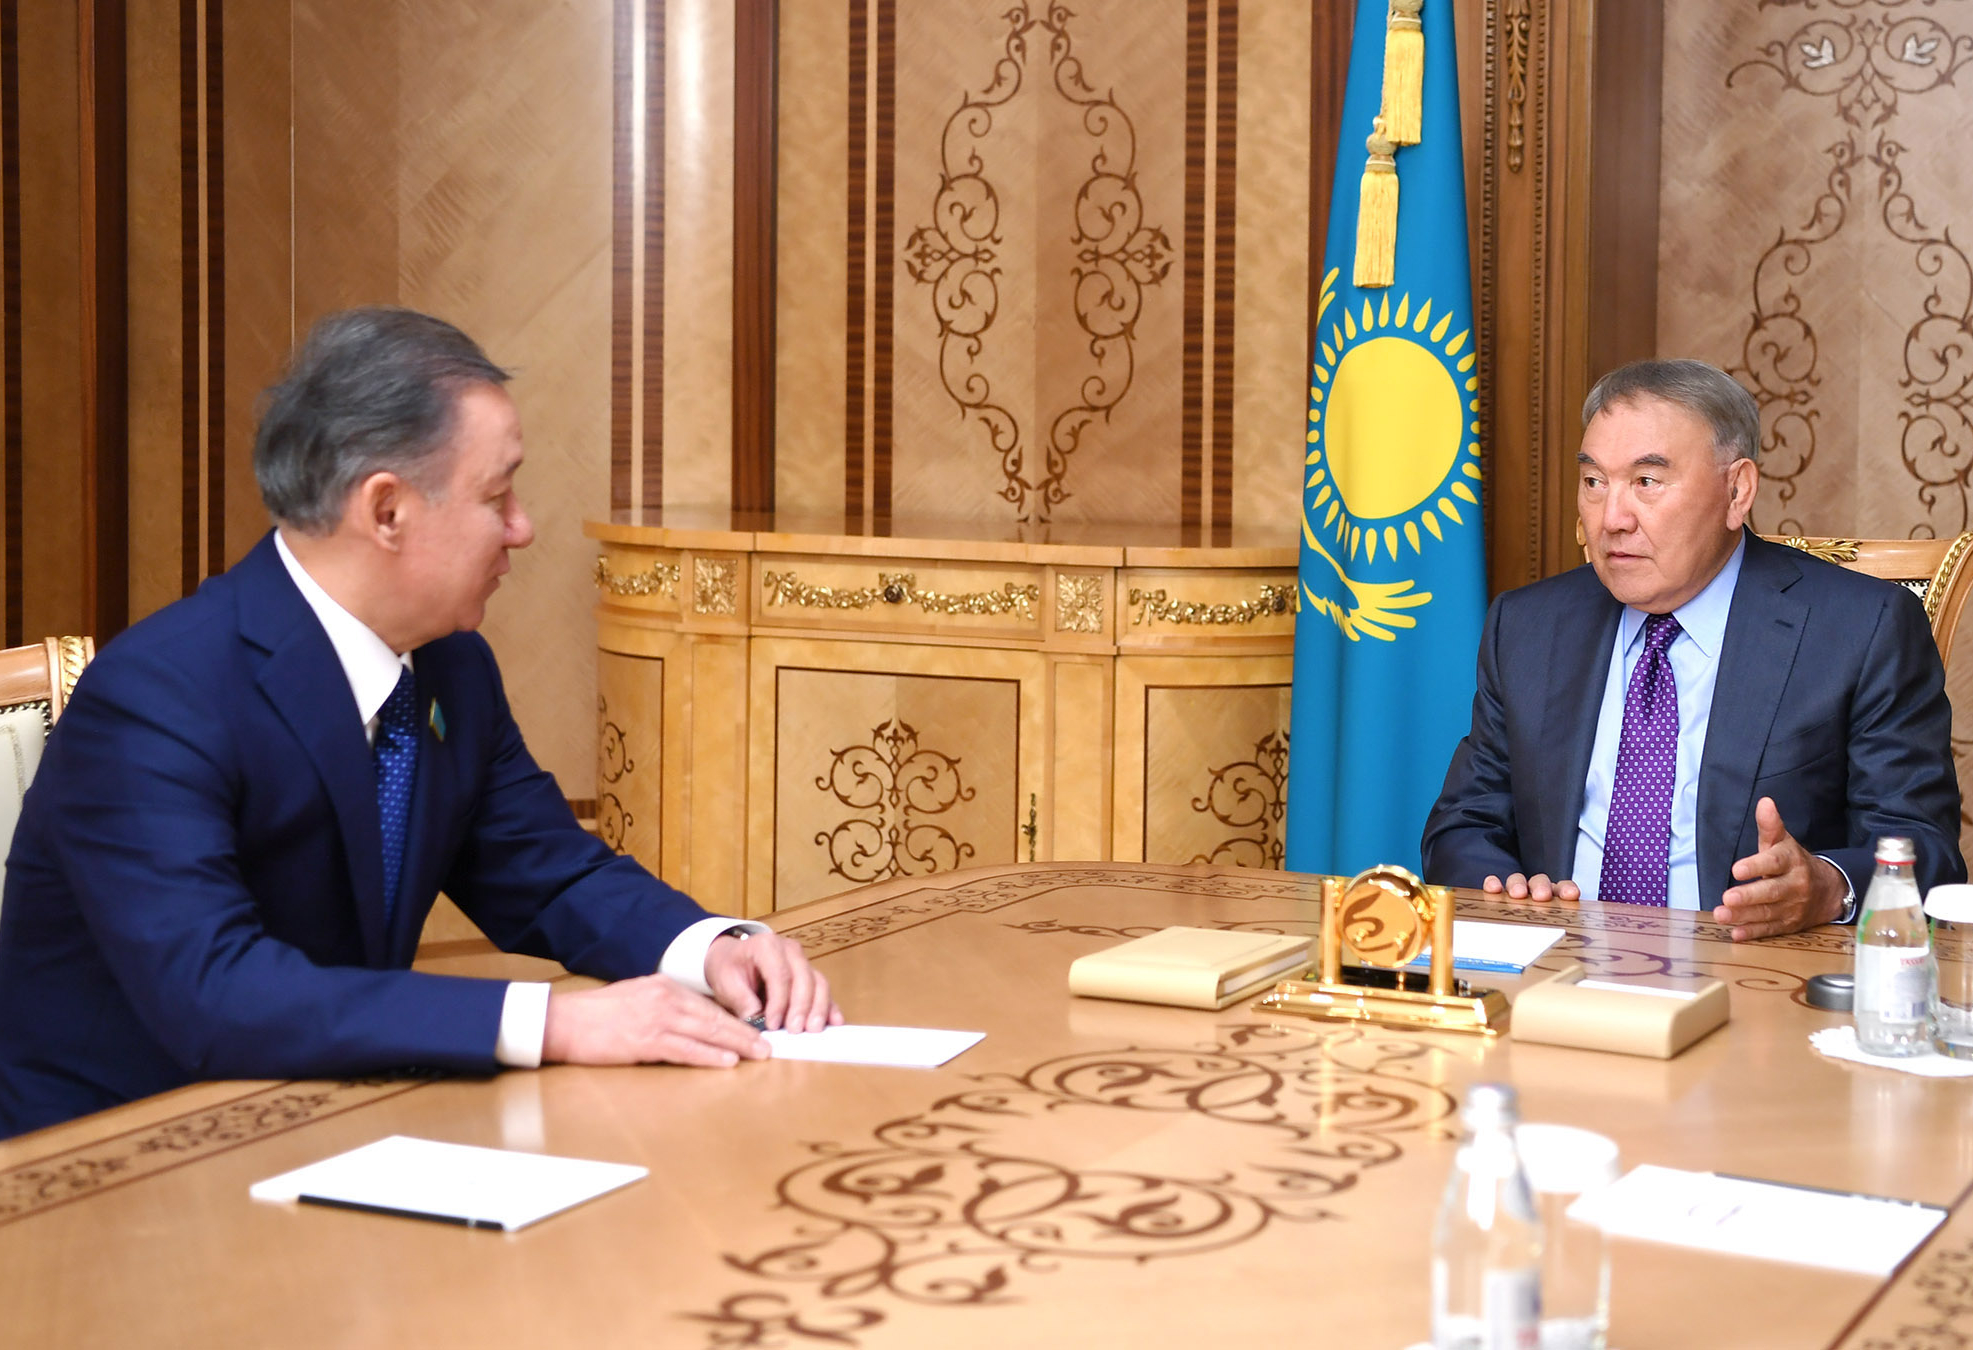 The first President of Kazakhstan meets Nurlan Nigmatulin